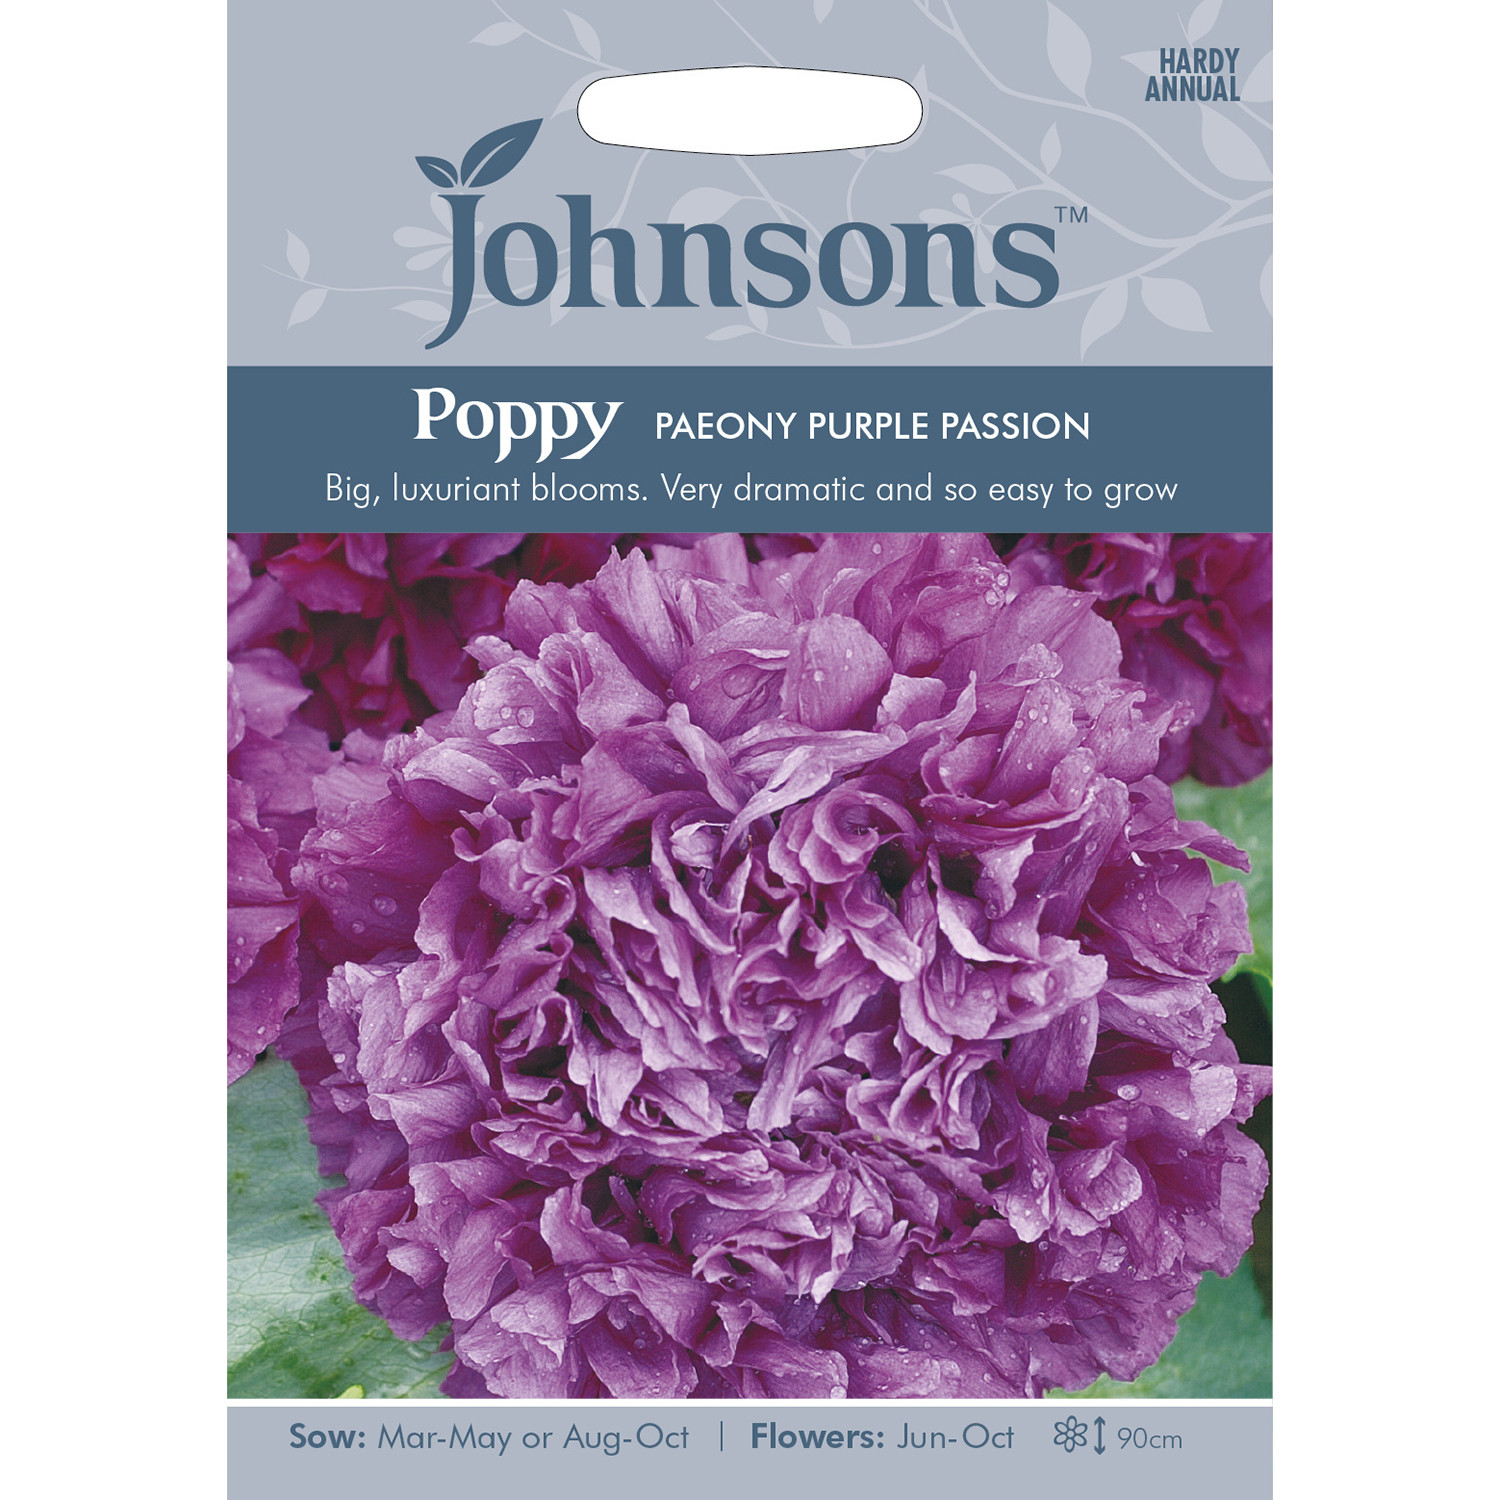 Johnsons Poppy Paeony Purple Passion Flower Seeds Image 2